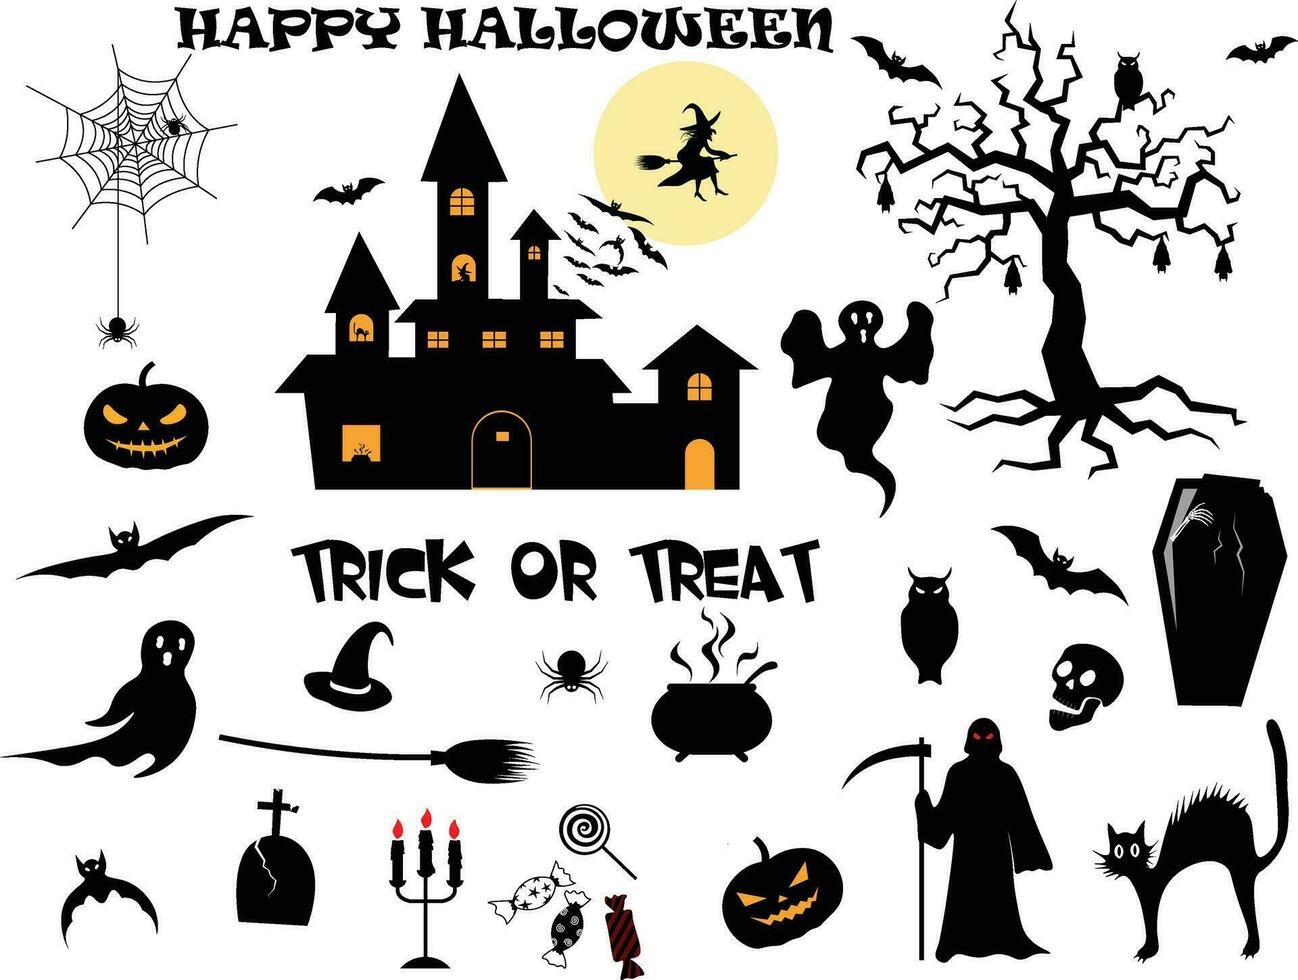 Halloween set illustration vector in cartoon style. Happy halloween. Halloween elements